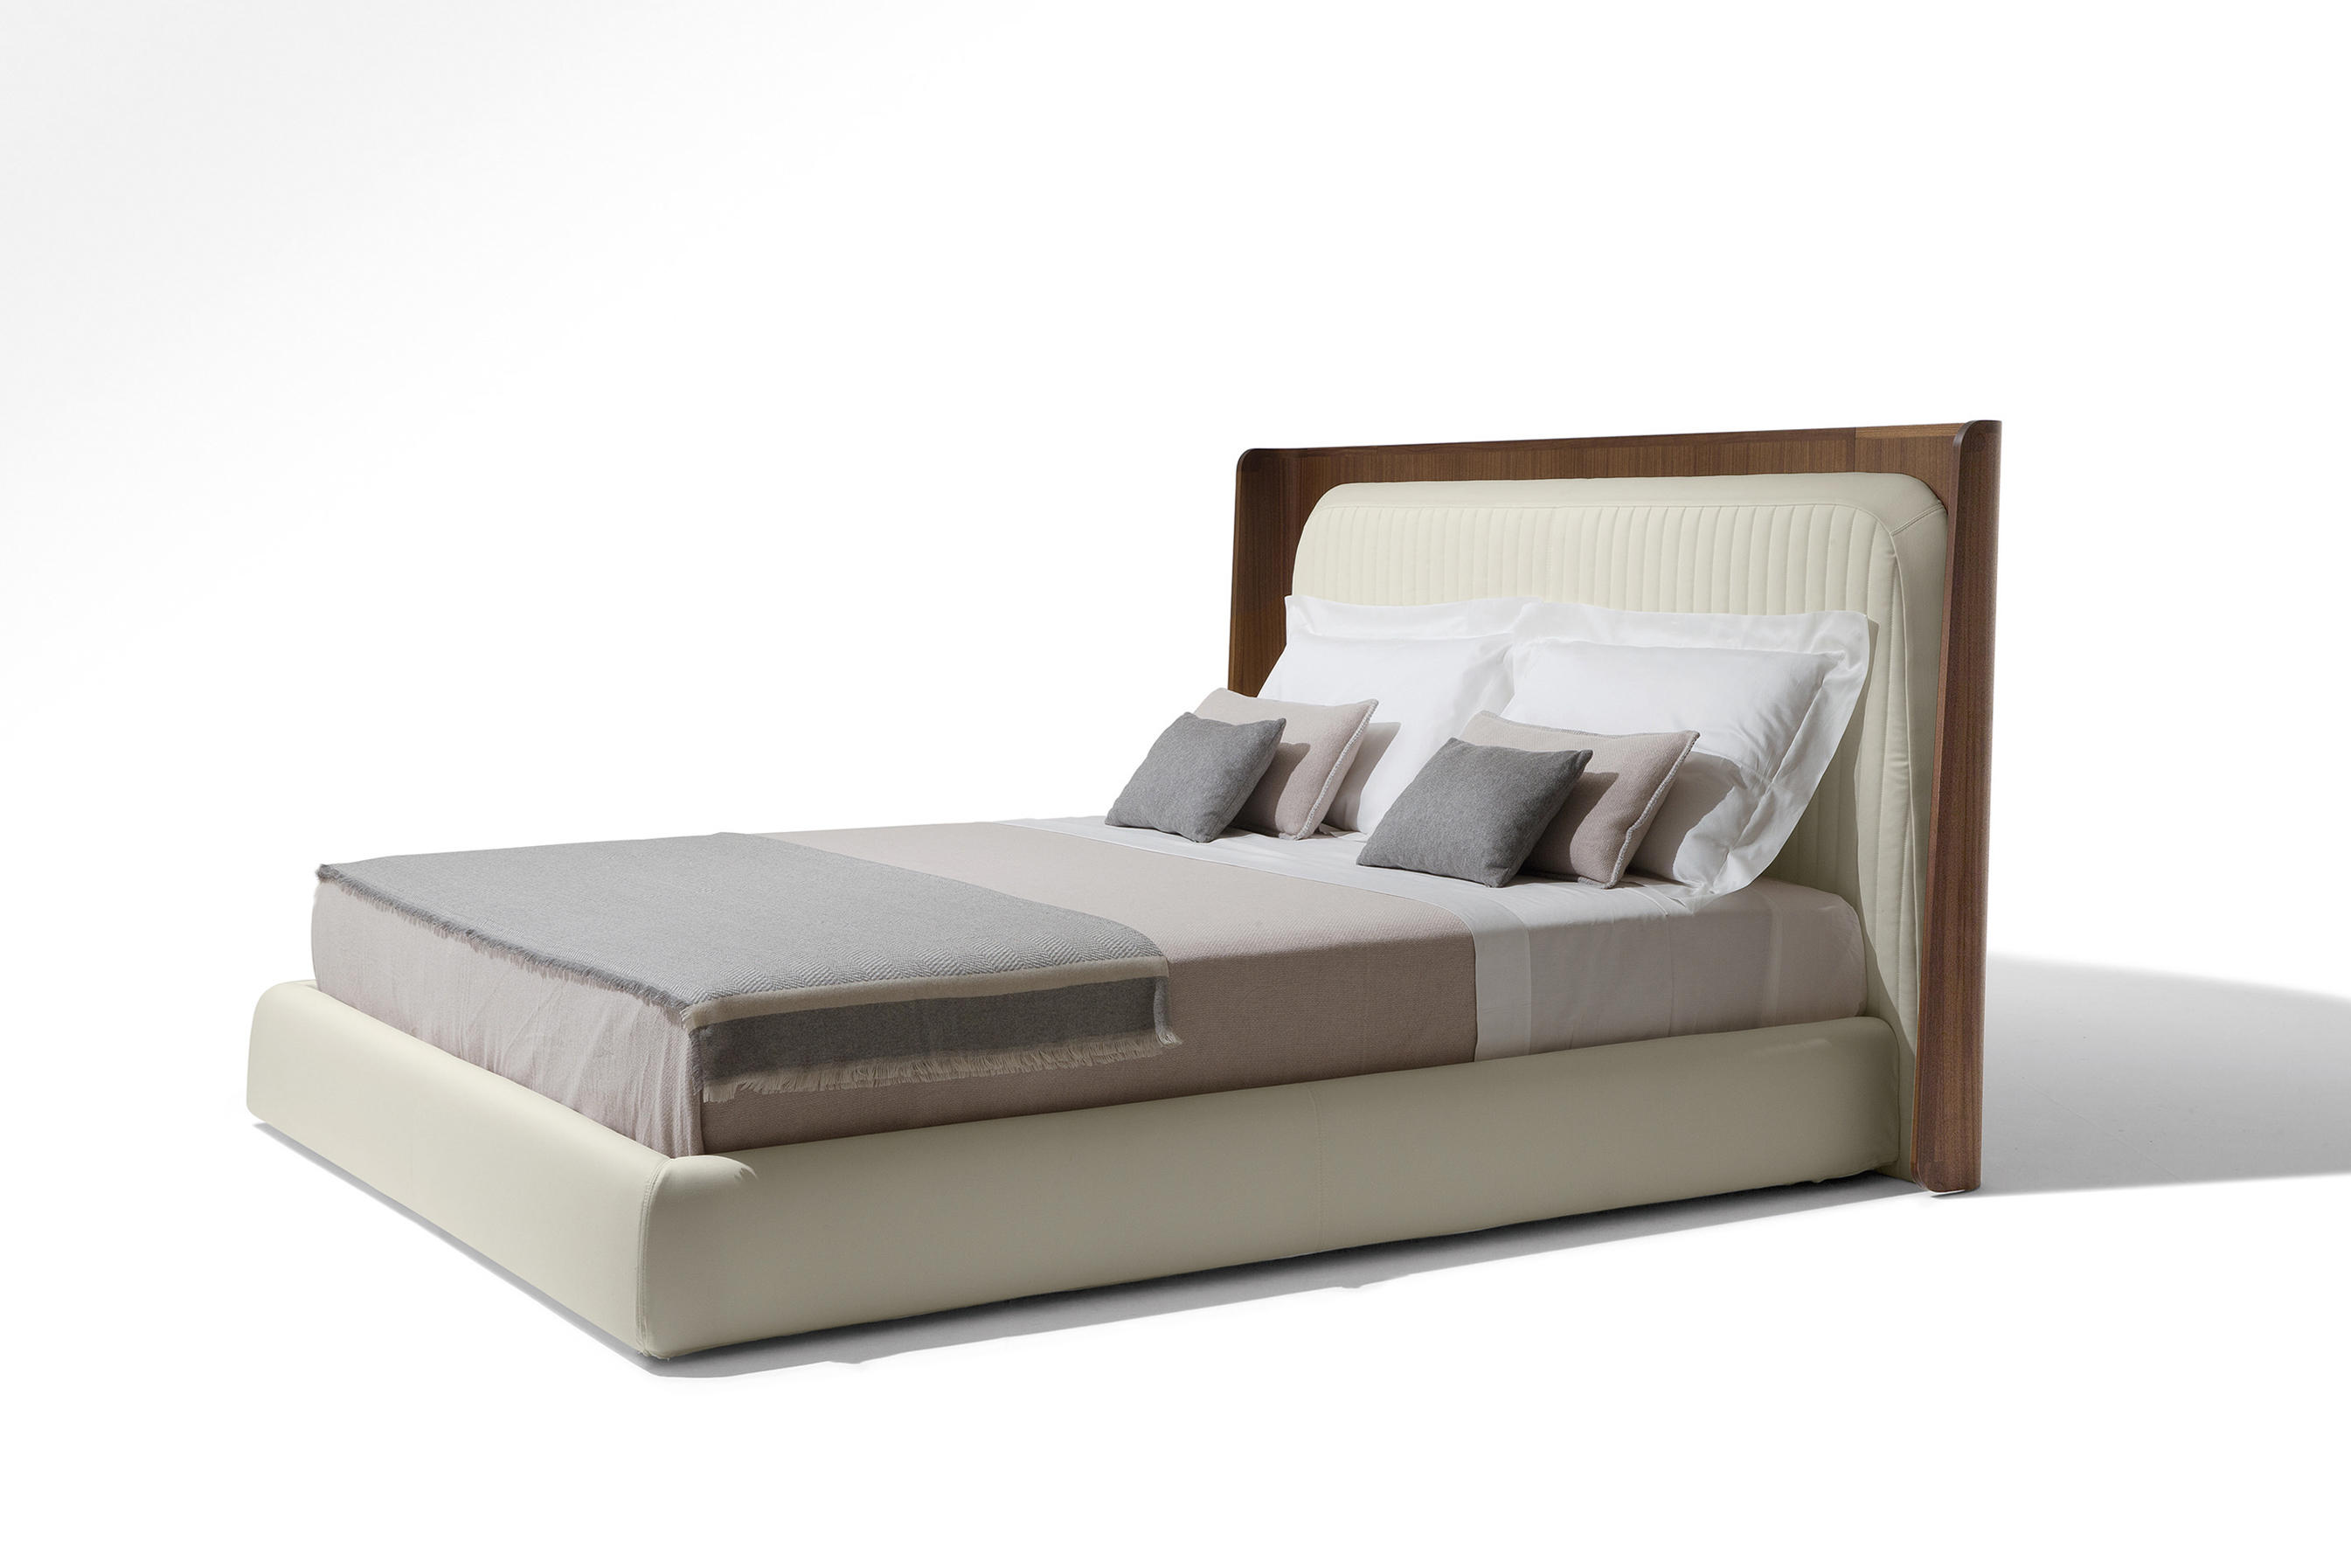 hypnos double mattress crendon furniture ebay